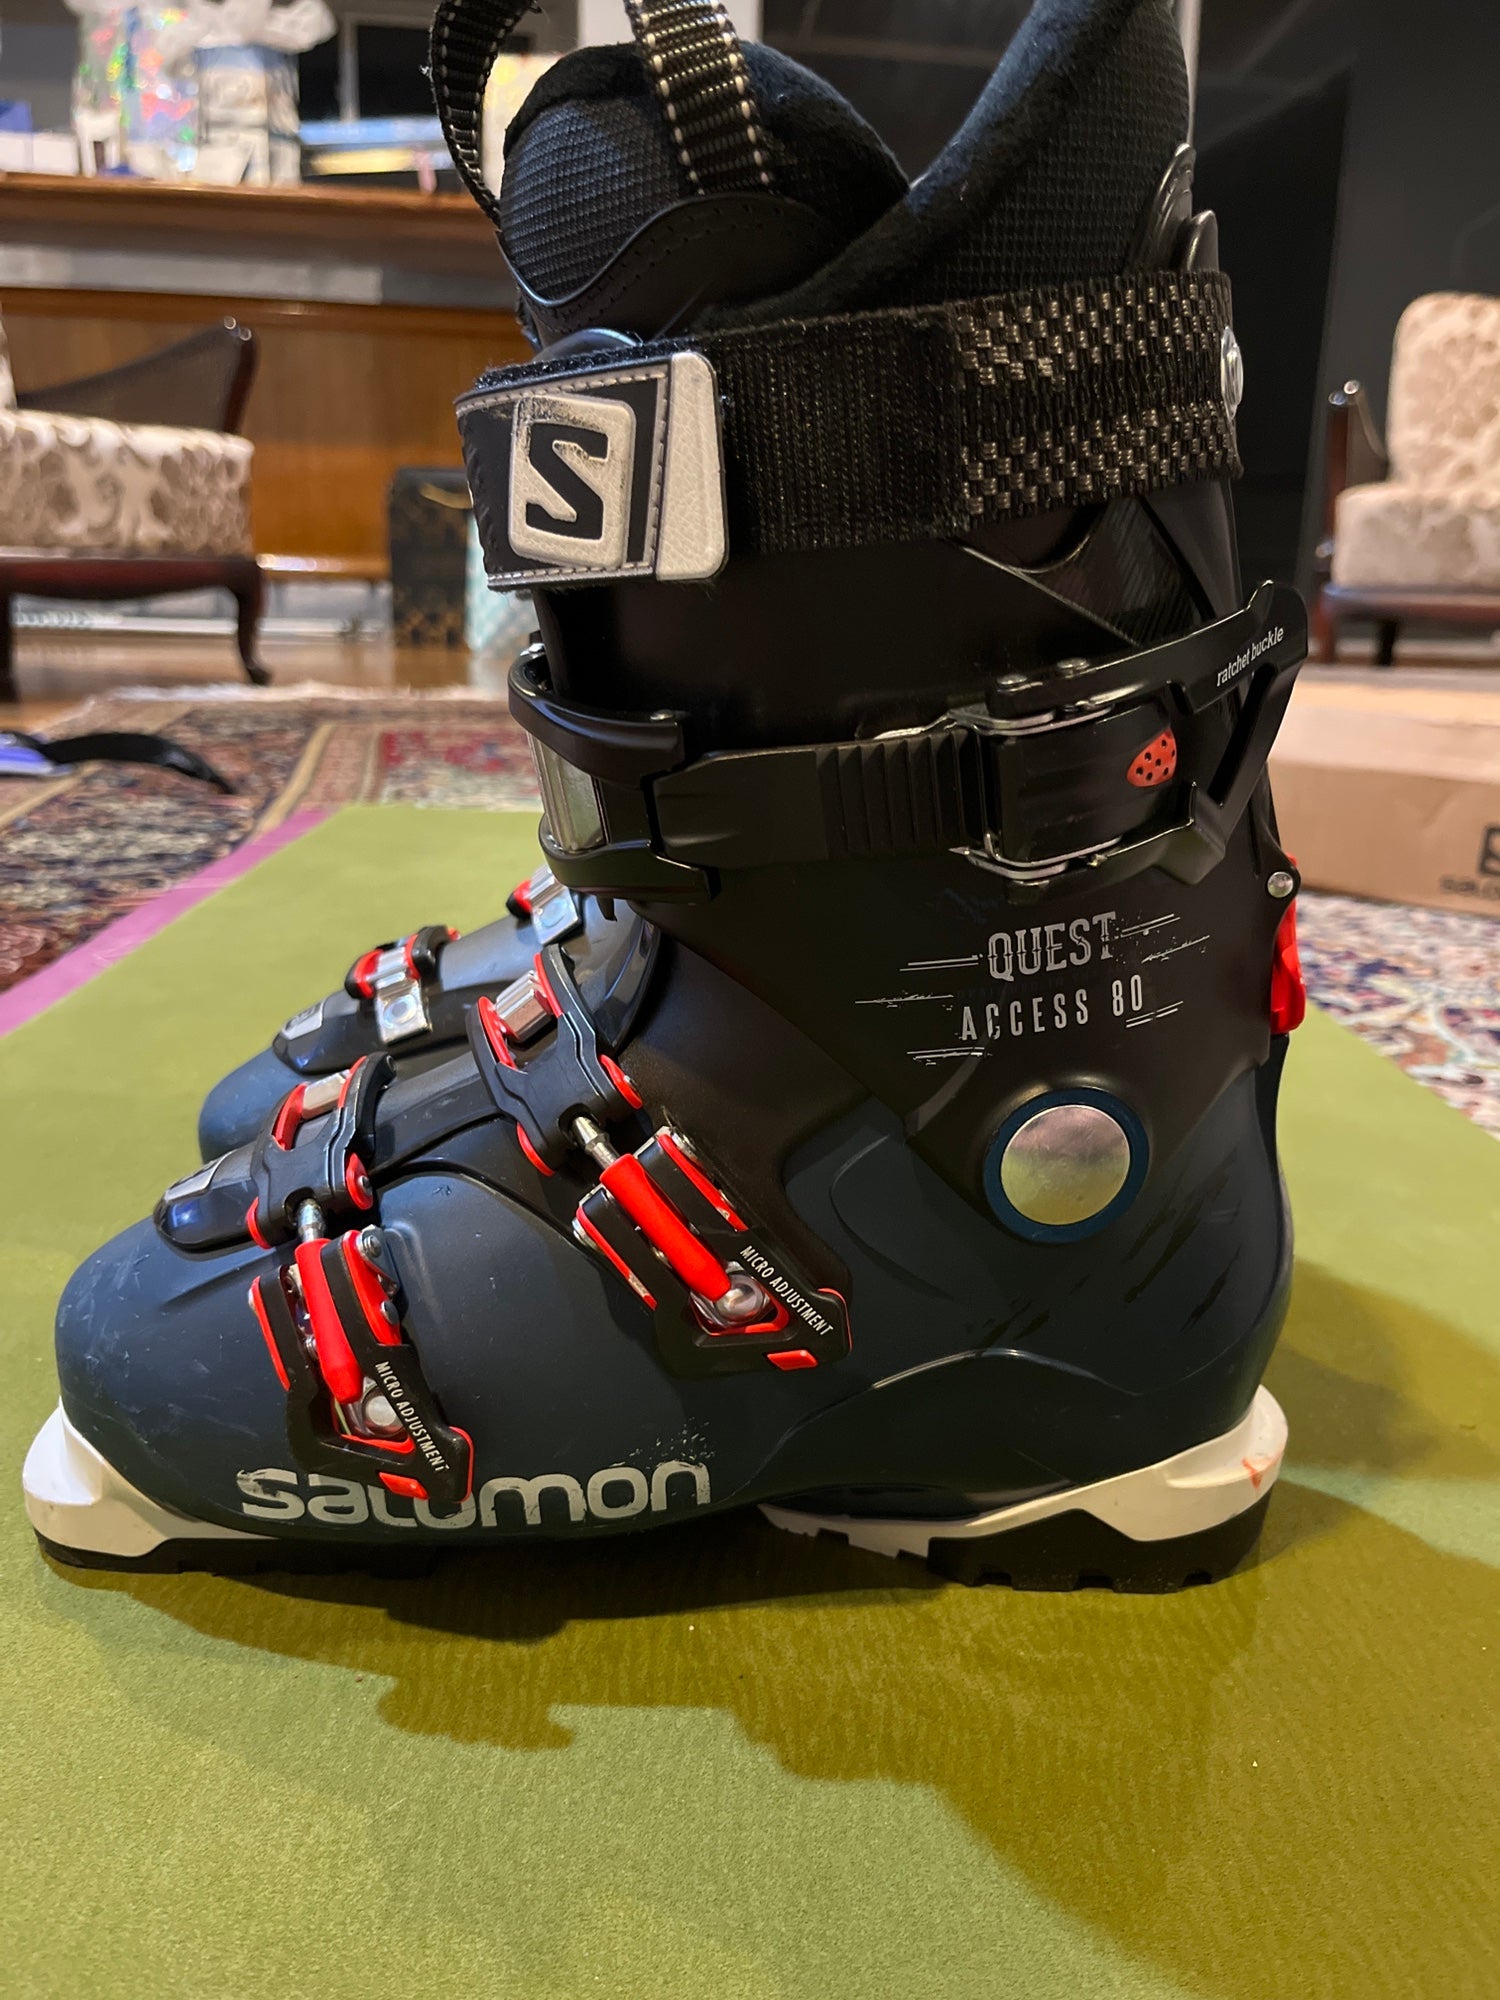 Excursie Enzovoorts Bereiken Solomon Quest Access 80 (25.5) ski boots | SidelineSwap